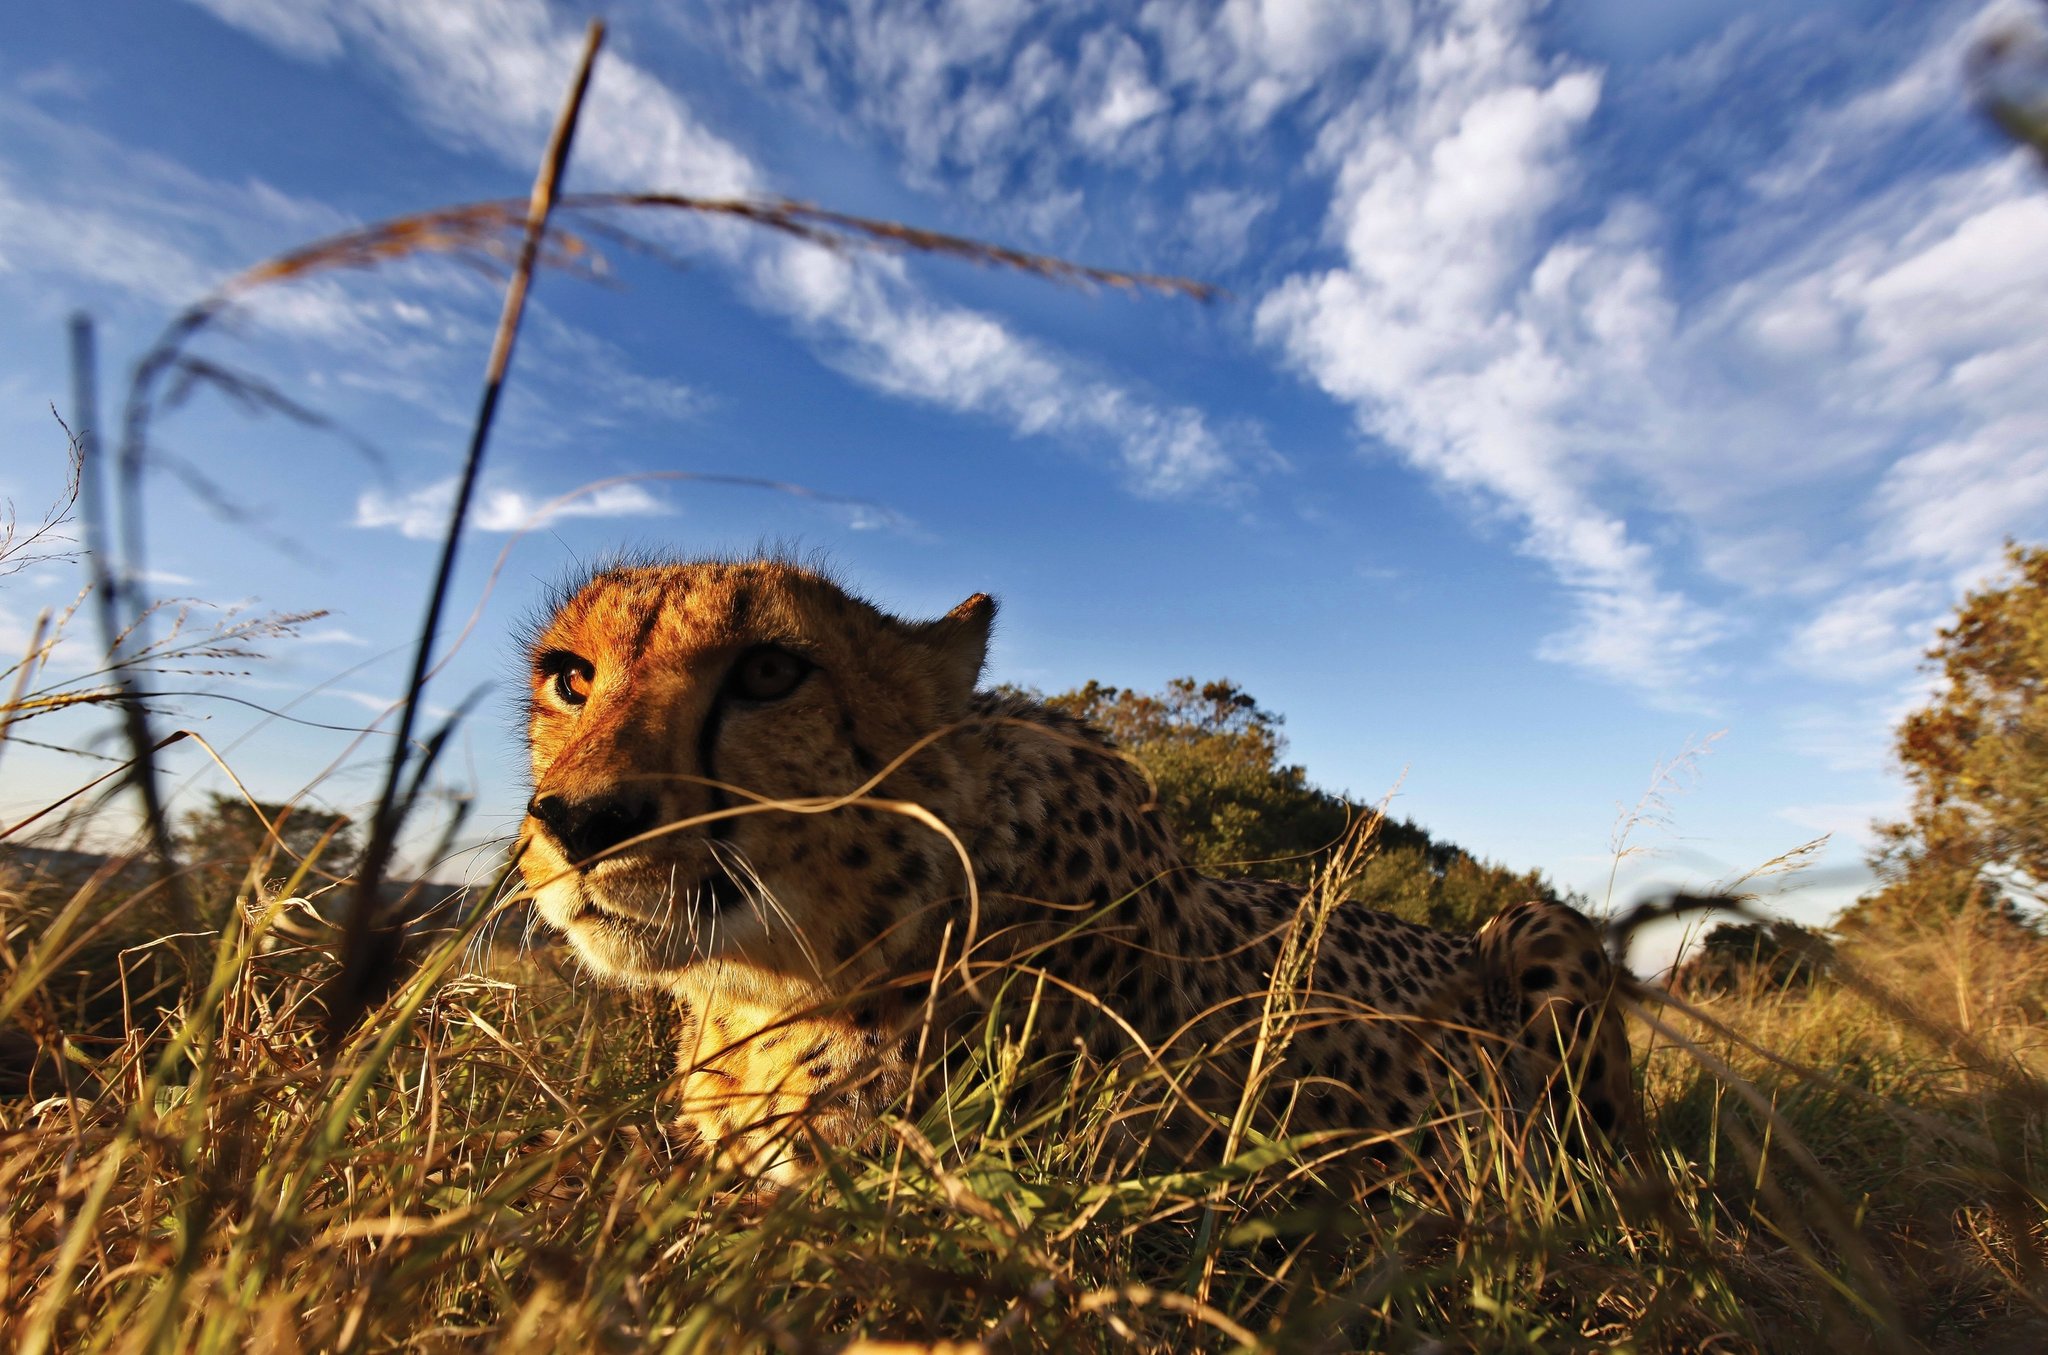 Photo of a cheetah in ambush